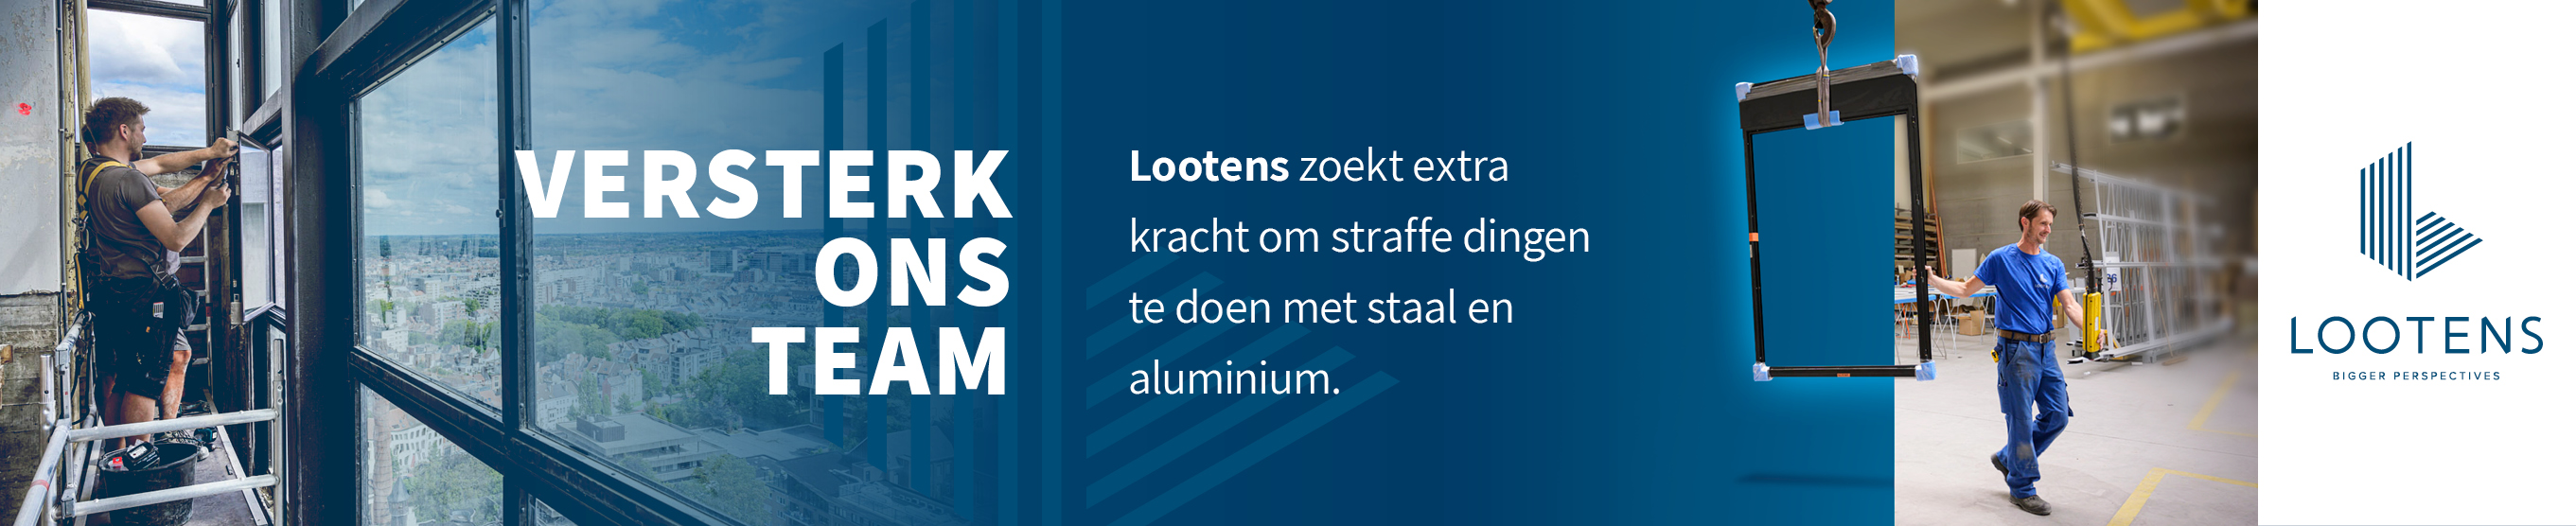 Lootens jobs